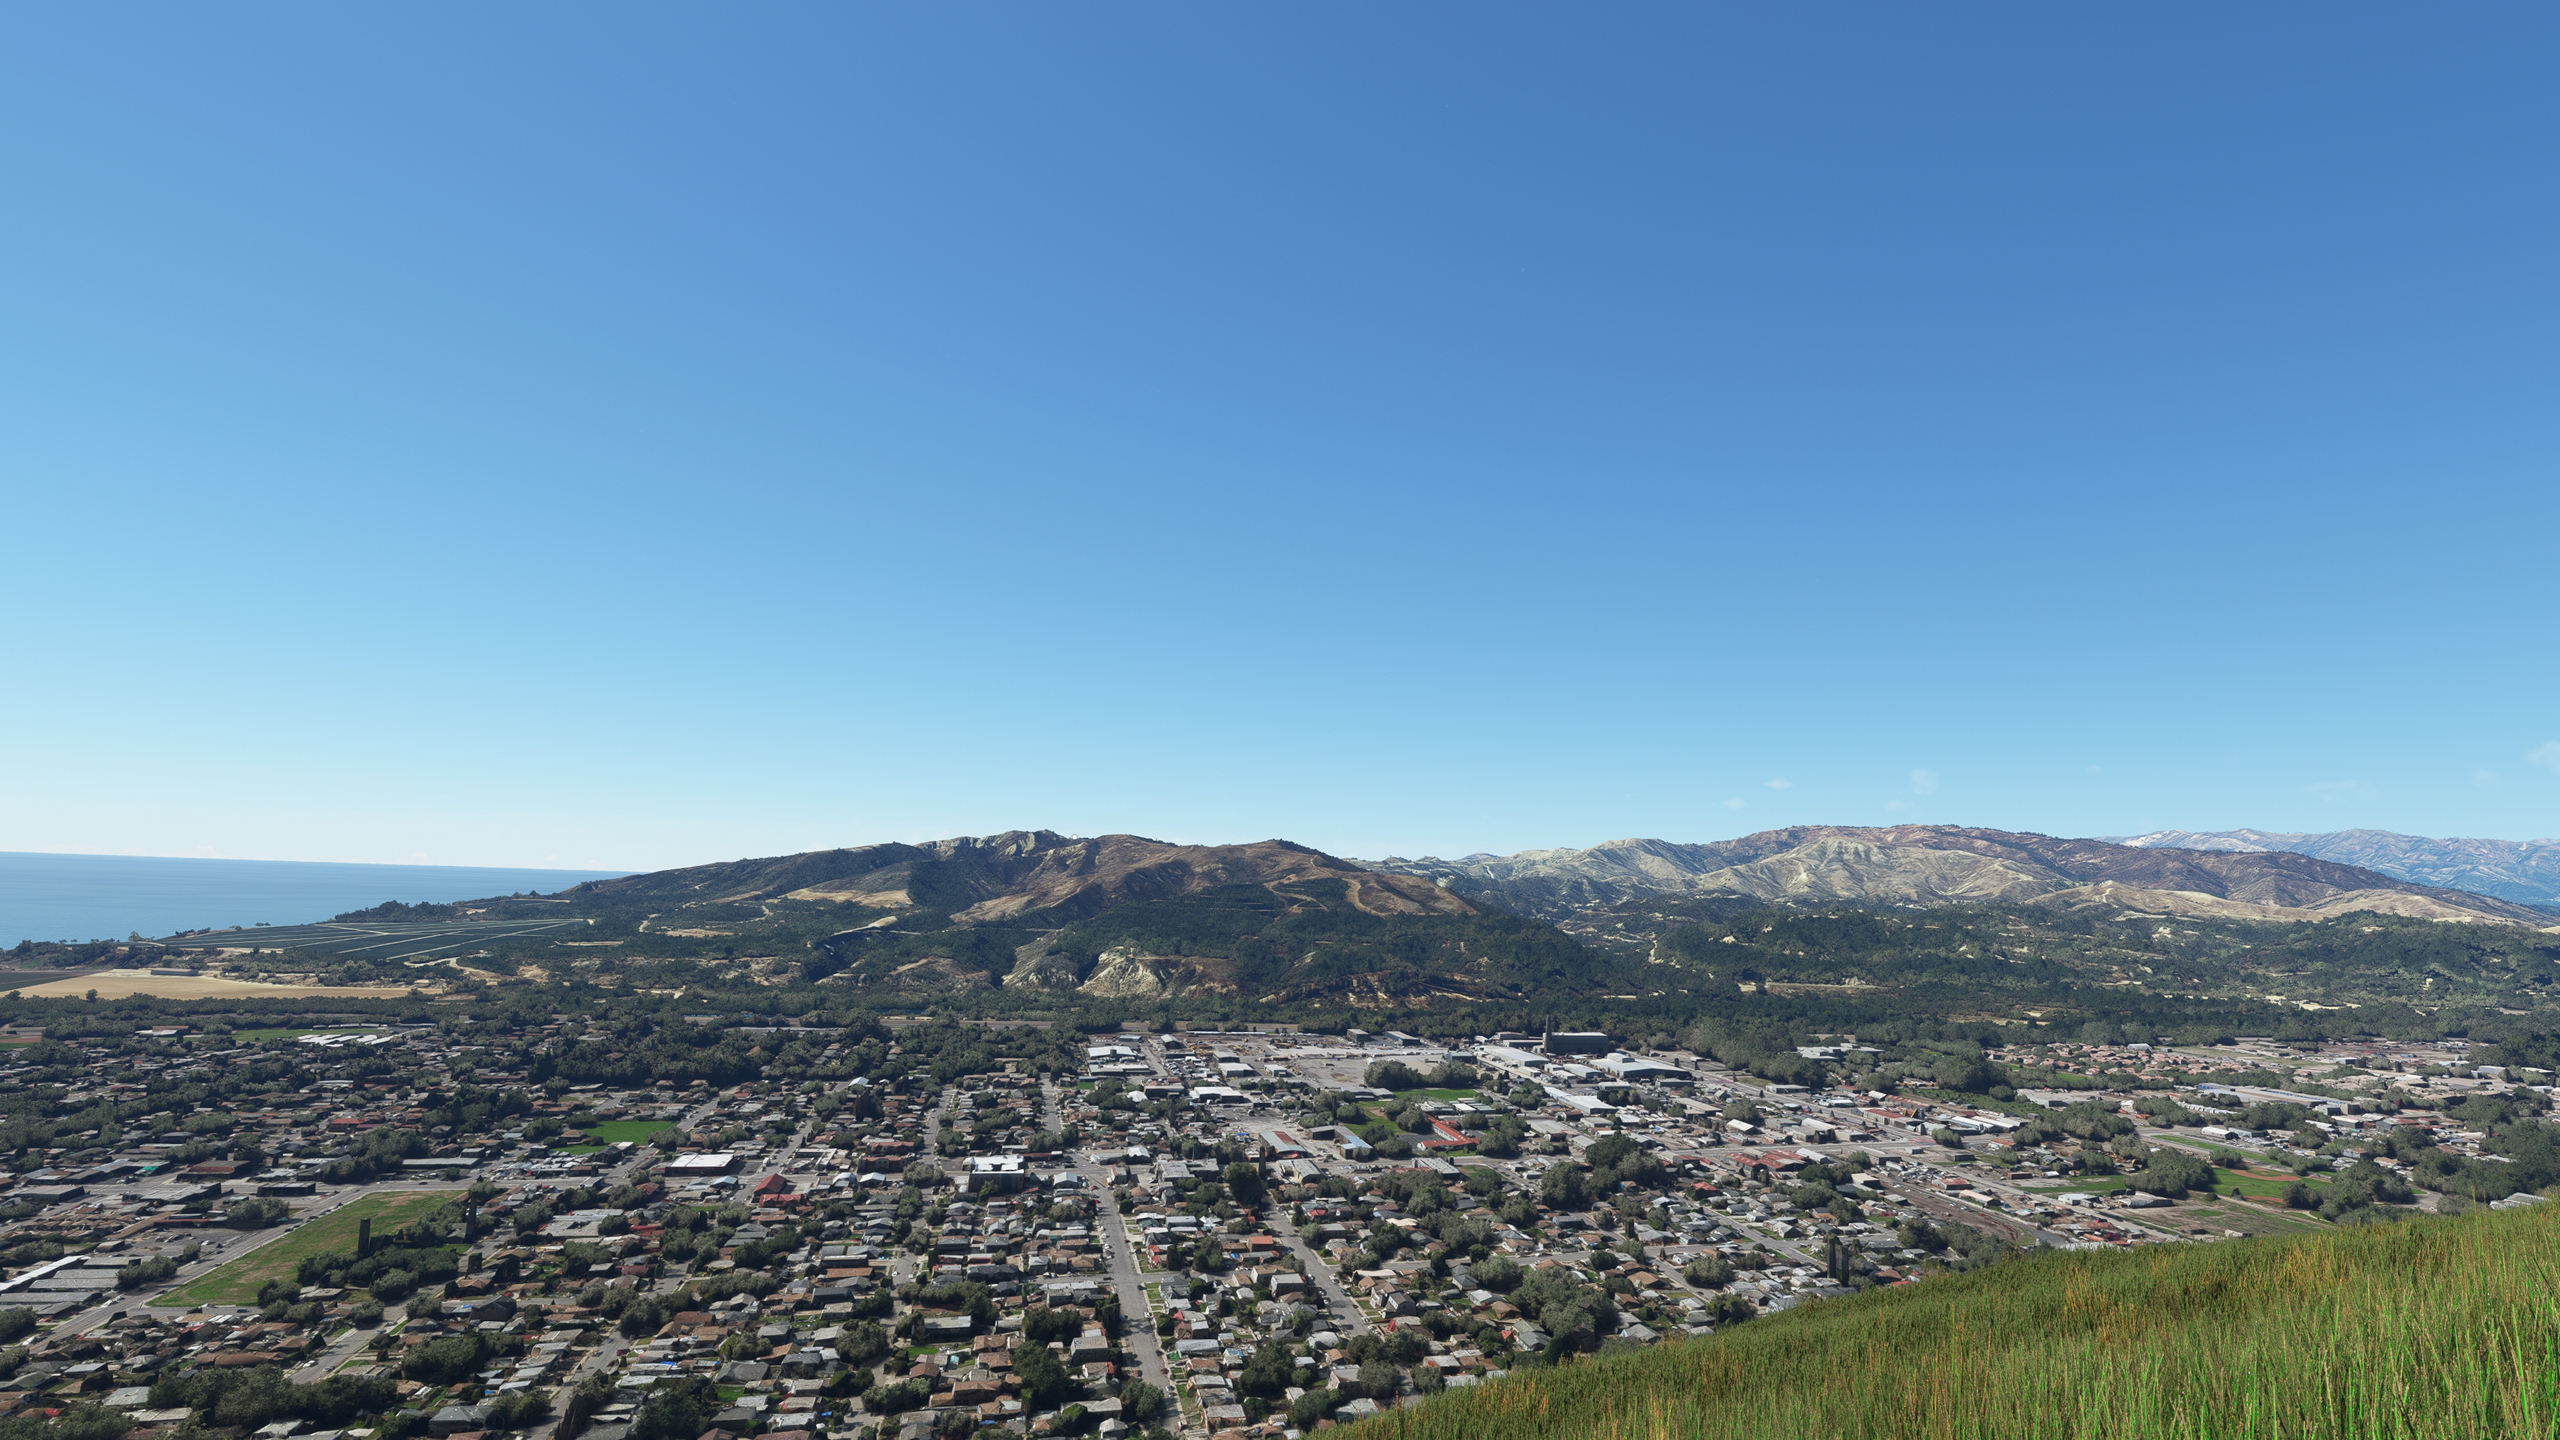 Microsoft Flight Simulator 2020 Los Angeles Flying Airplane Ocean View Highway Landscape 2560x1440